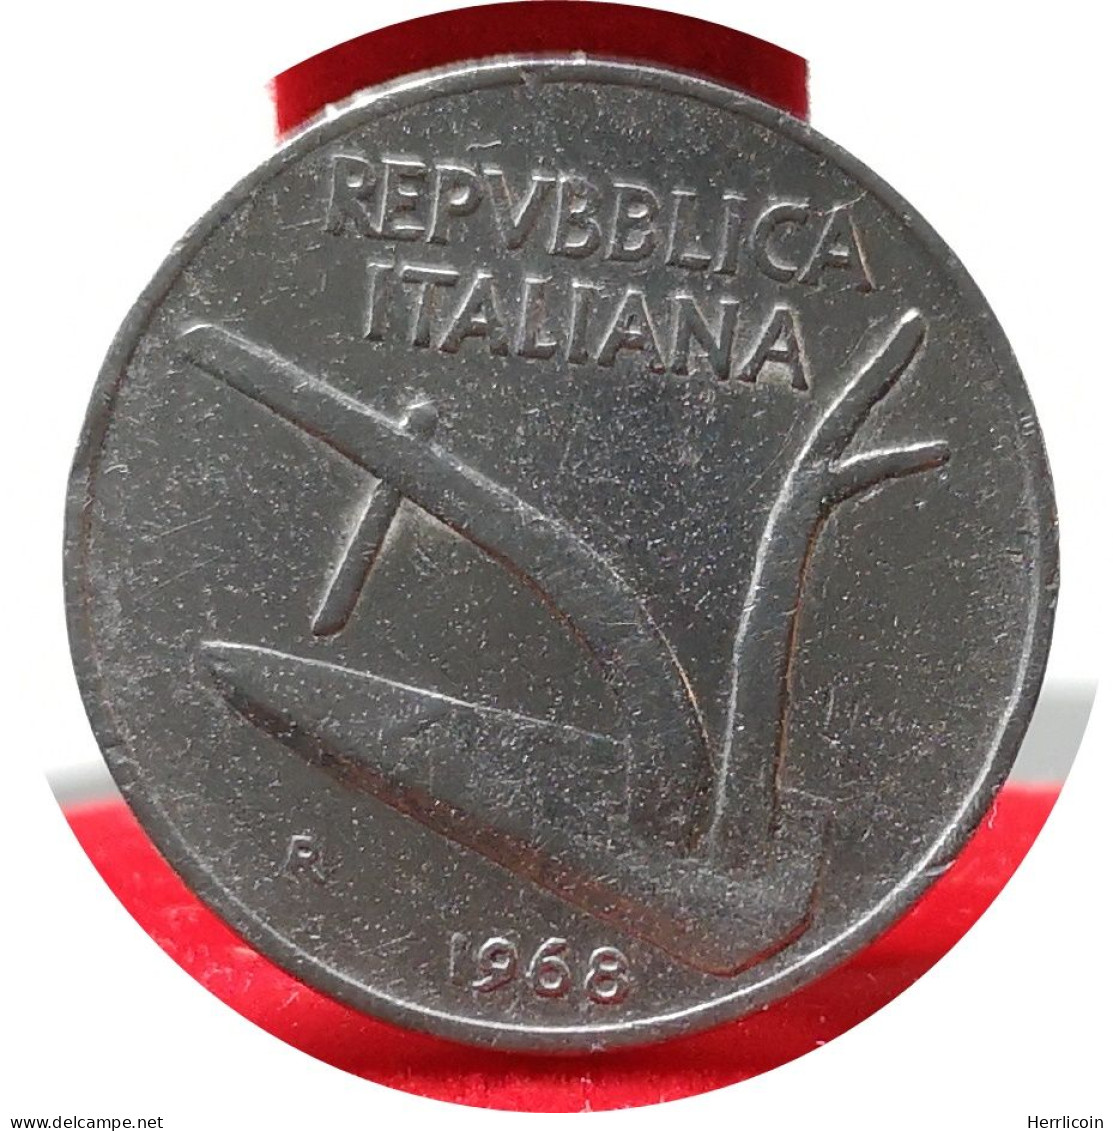 Monnaie Italie - 1968 - 10 Lire - 10 Lire